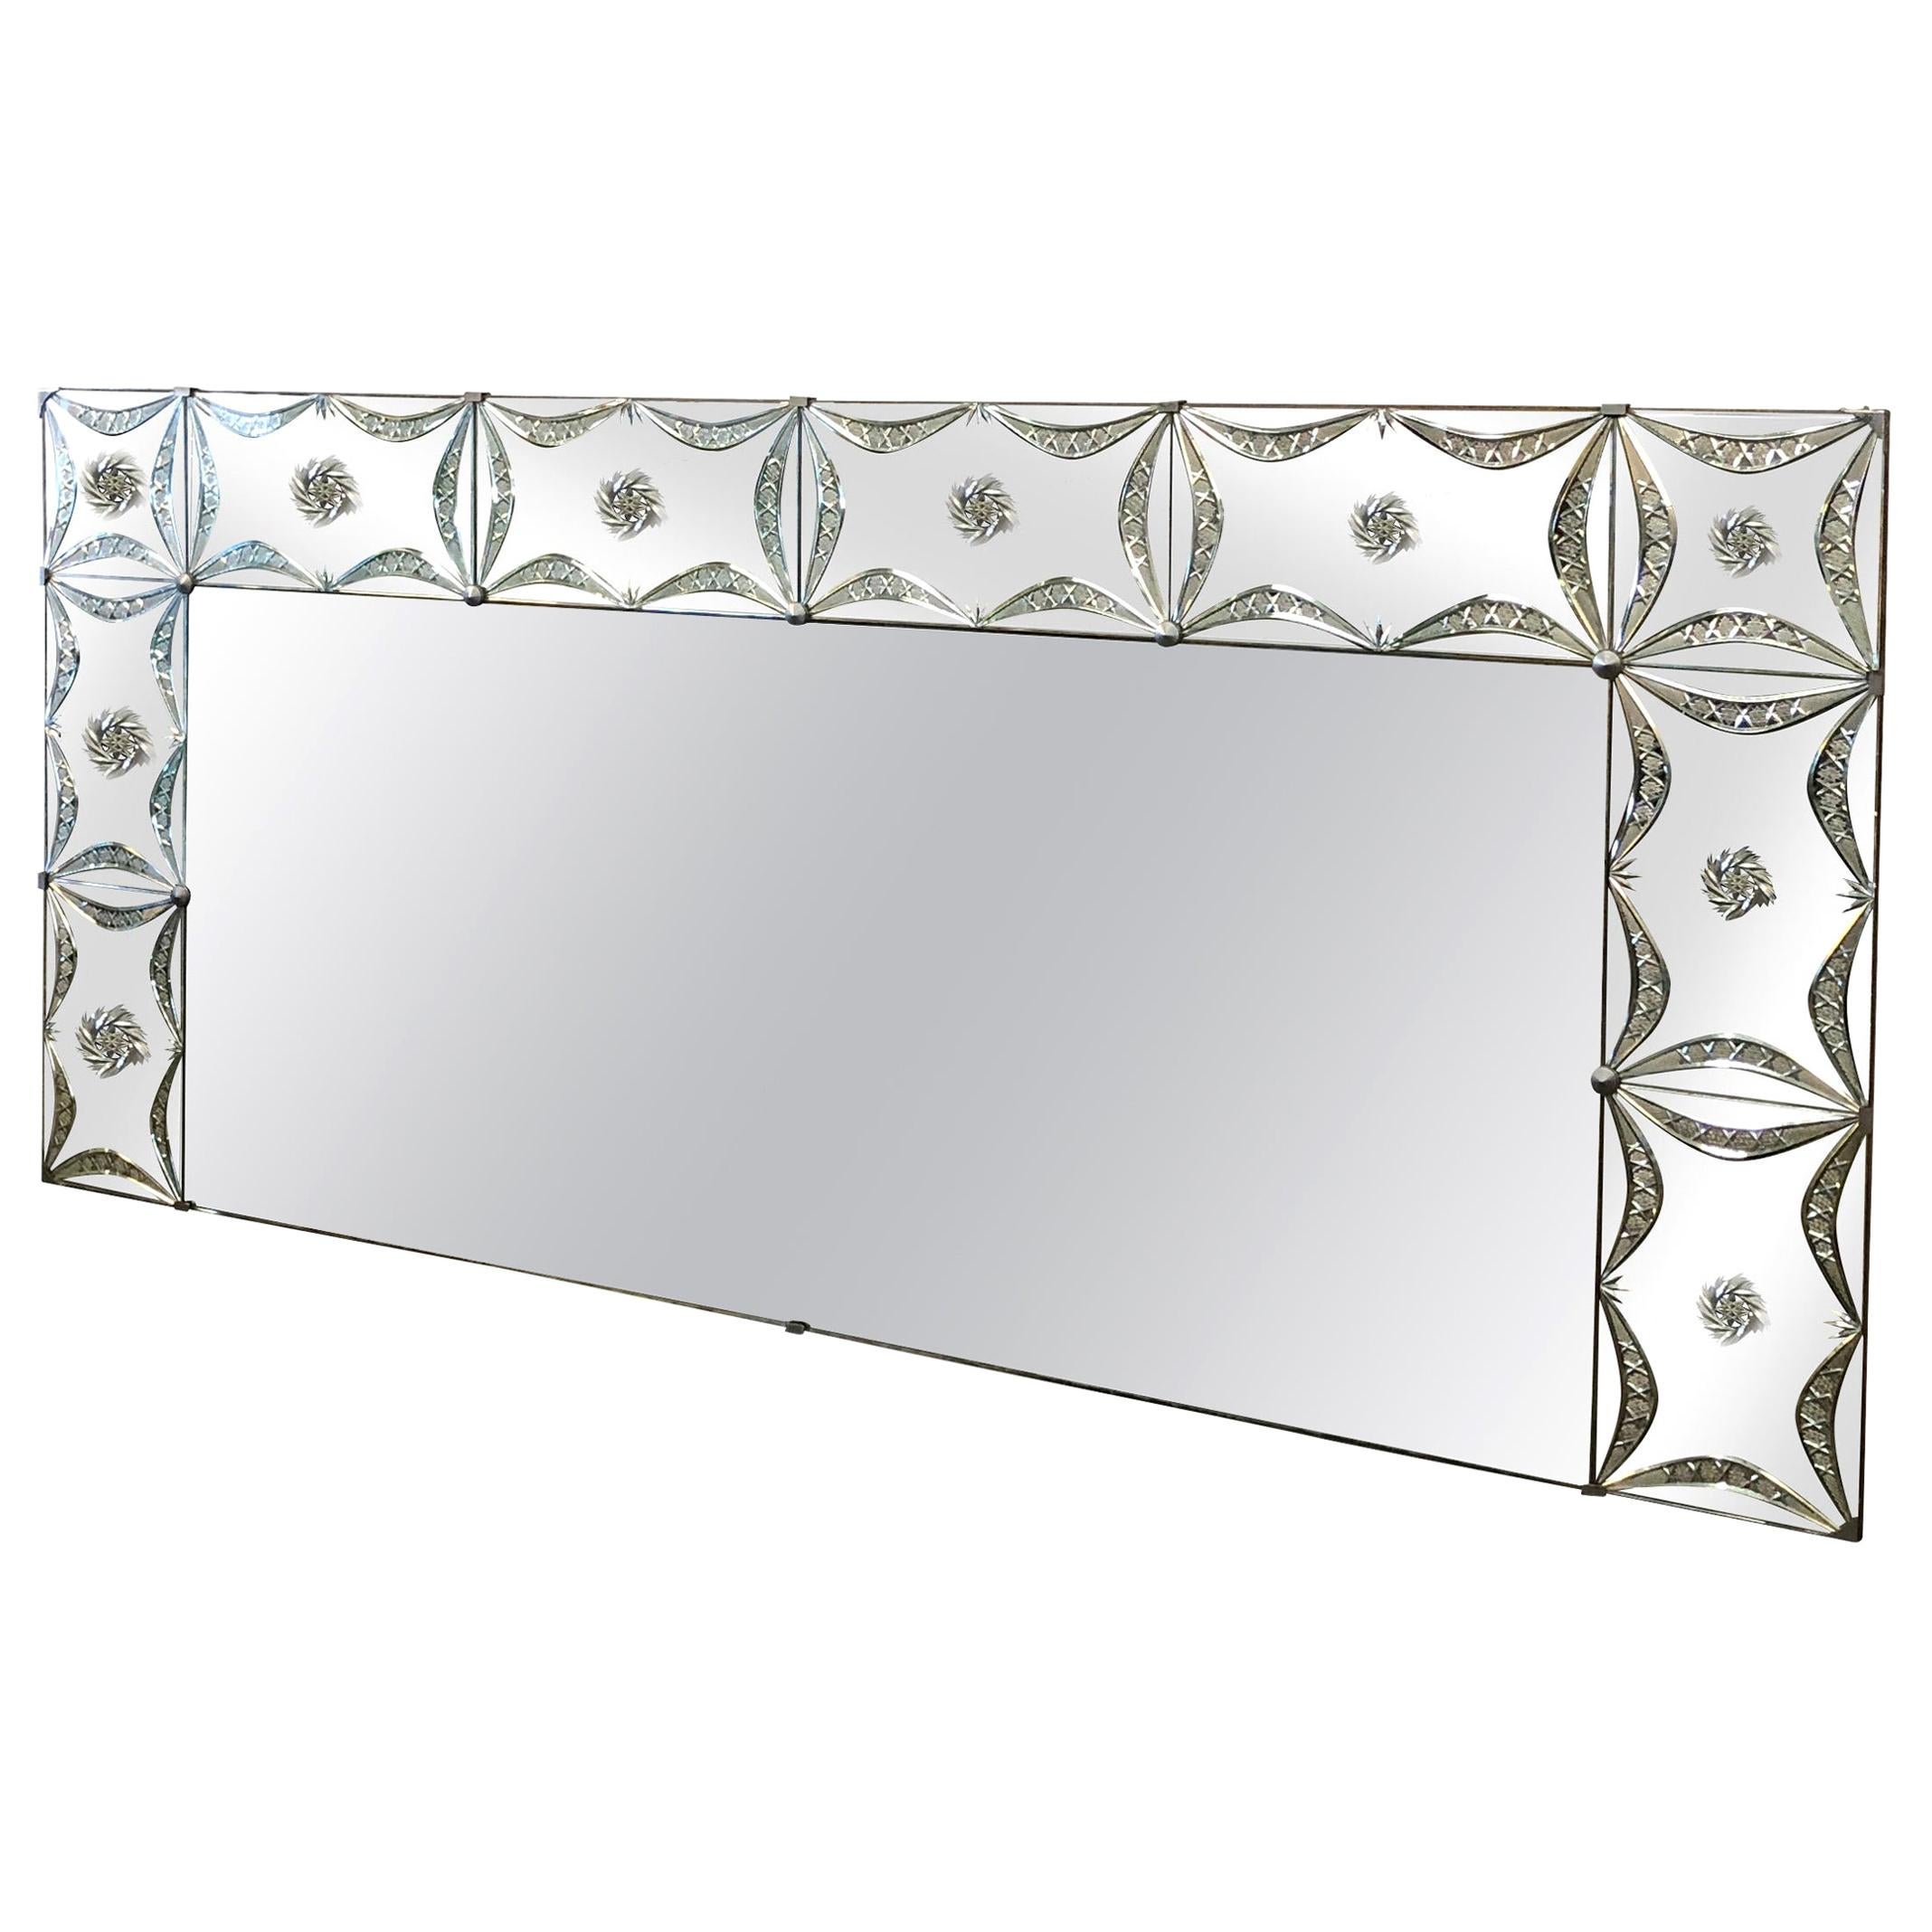 20th Century Silver French Horizontal Vintage Art Deco Glass Wall Mirror